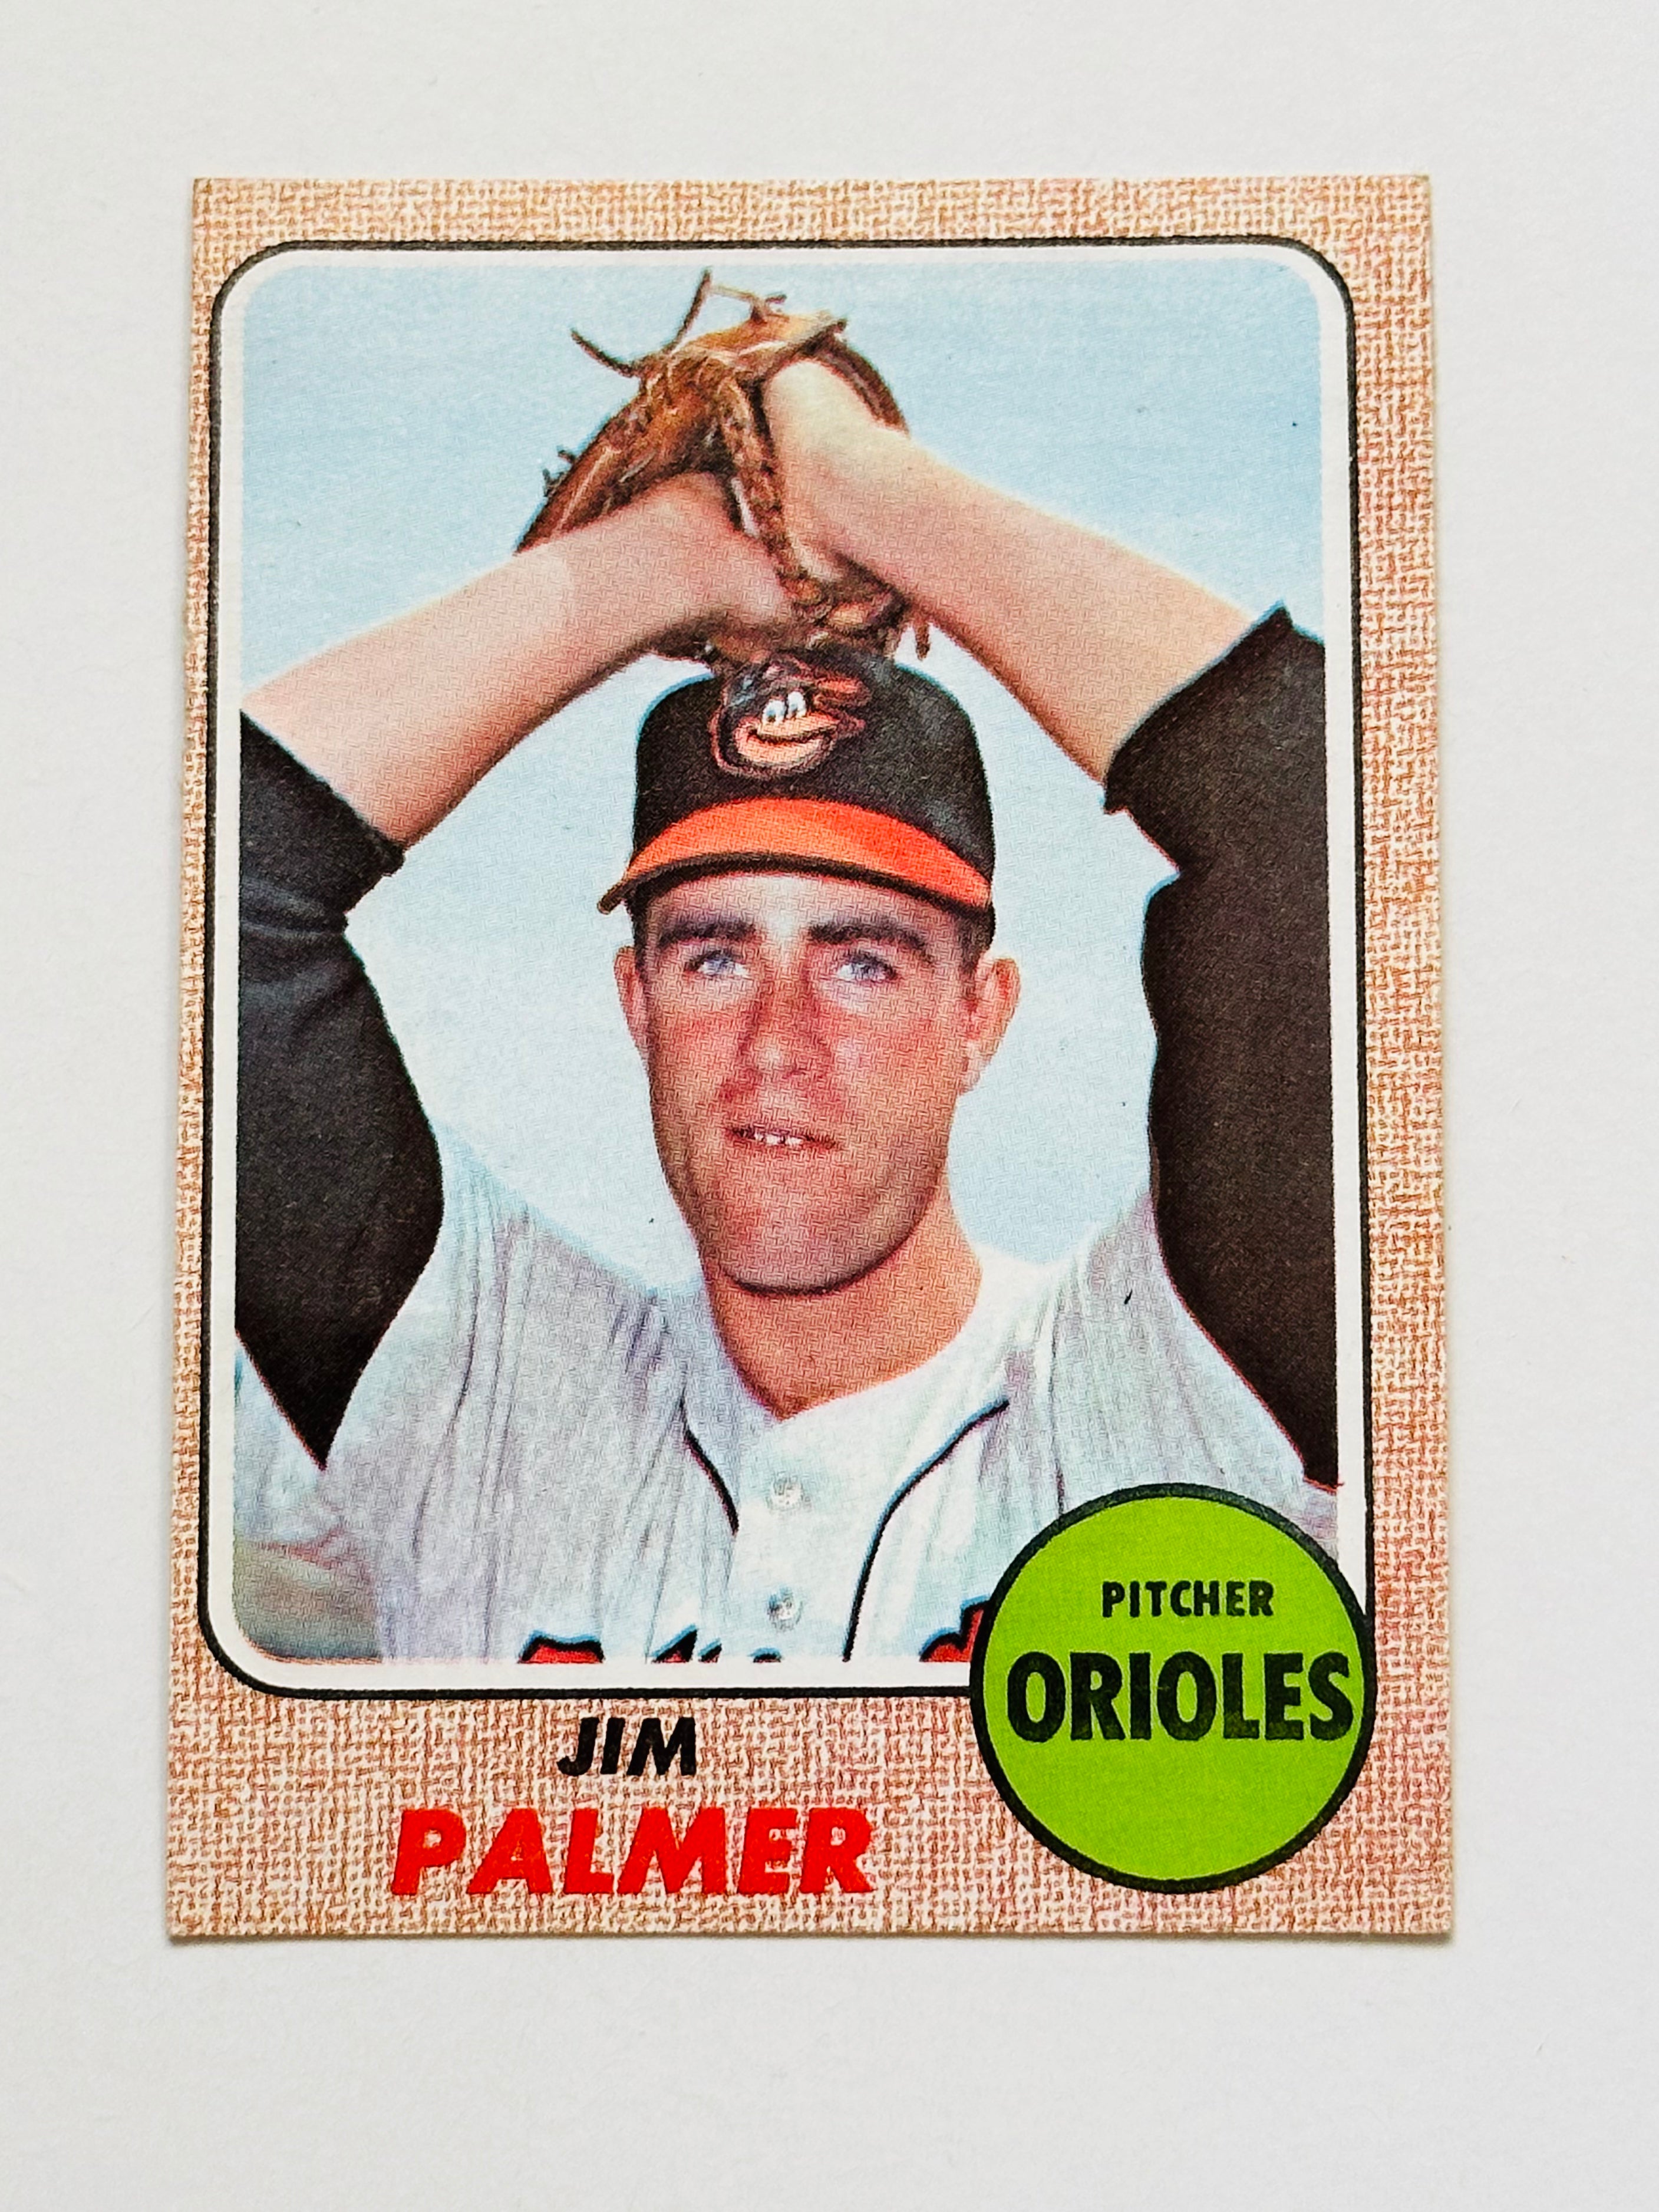 1968 Topps Jim Palmer baseball card